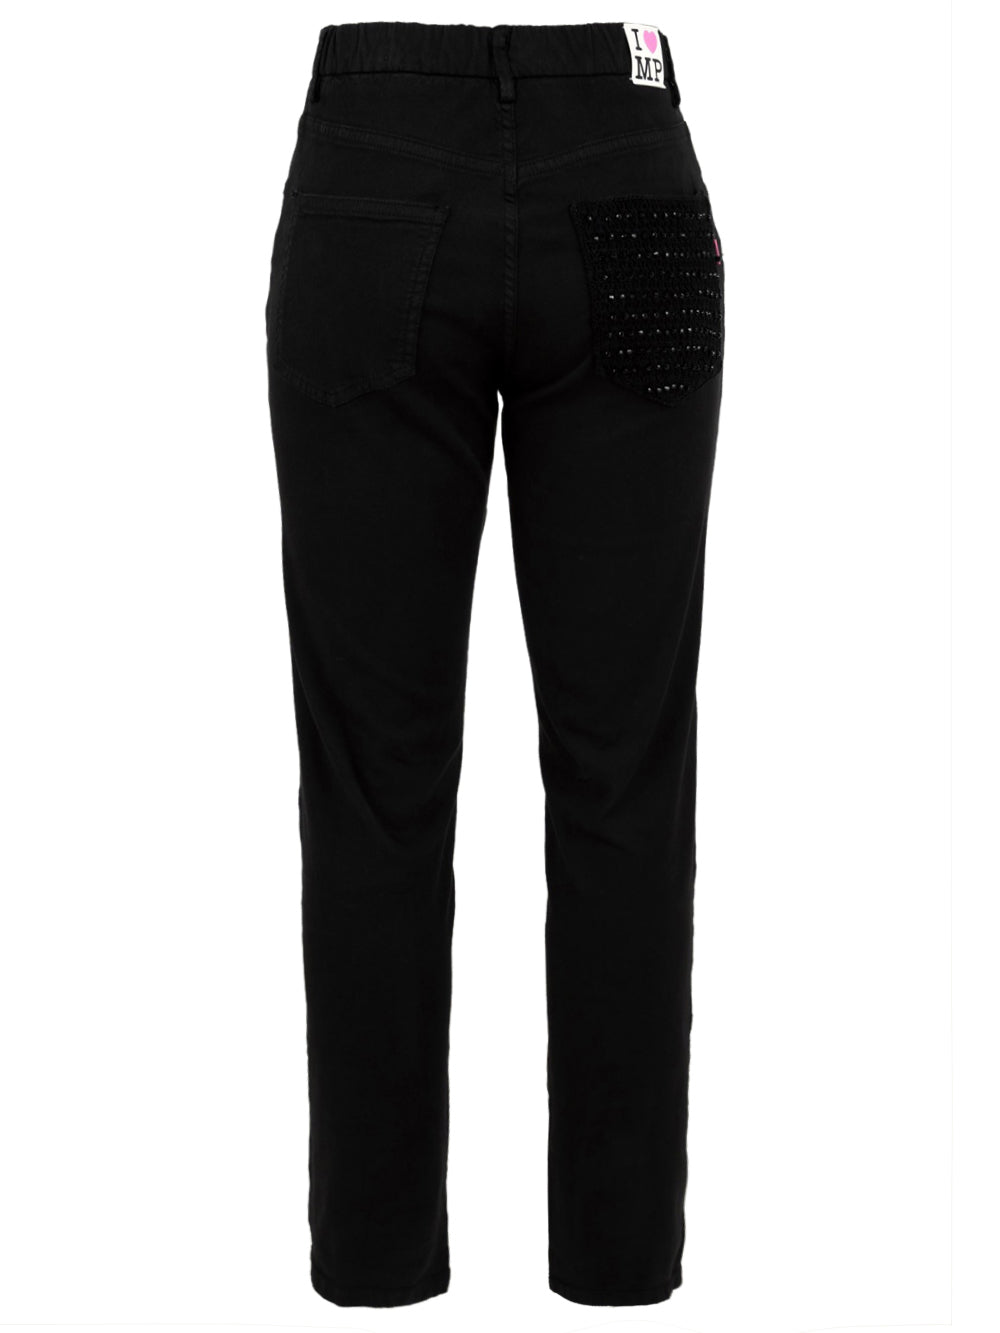 I LOVE MY PANTS Women's Trousers MP011 CINDY Black